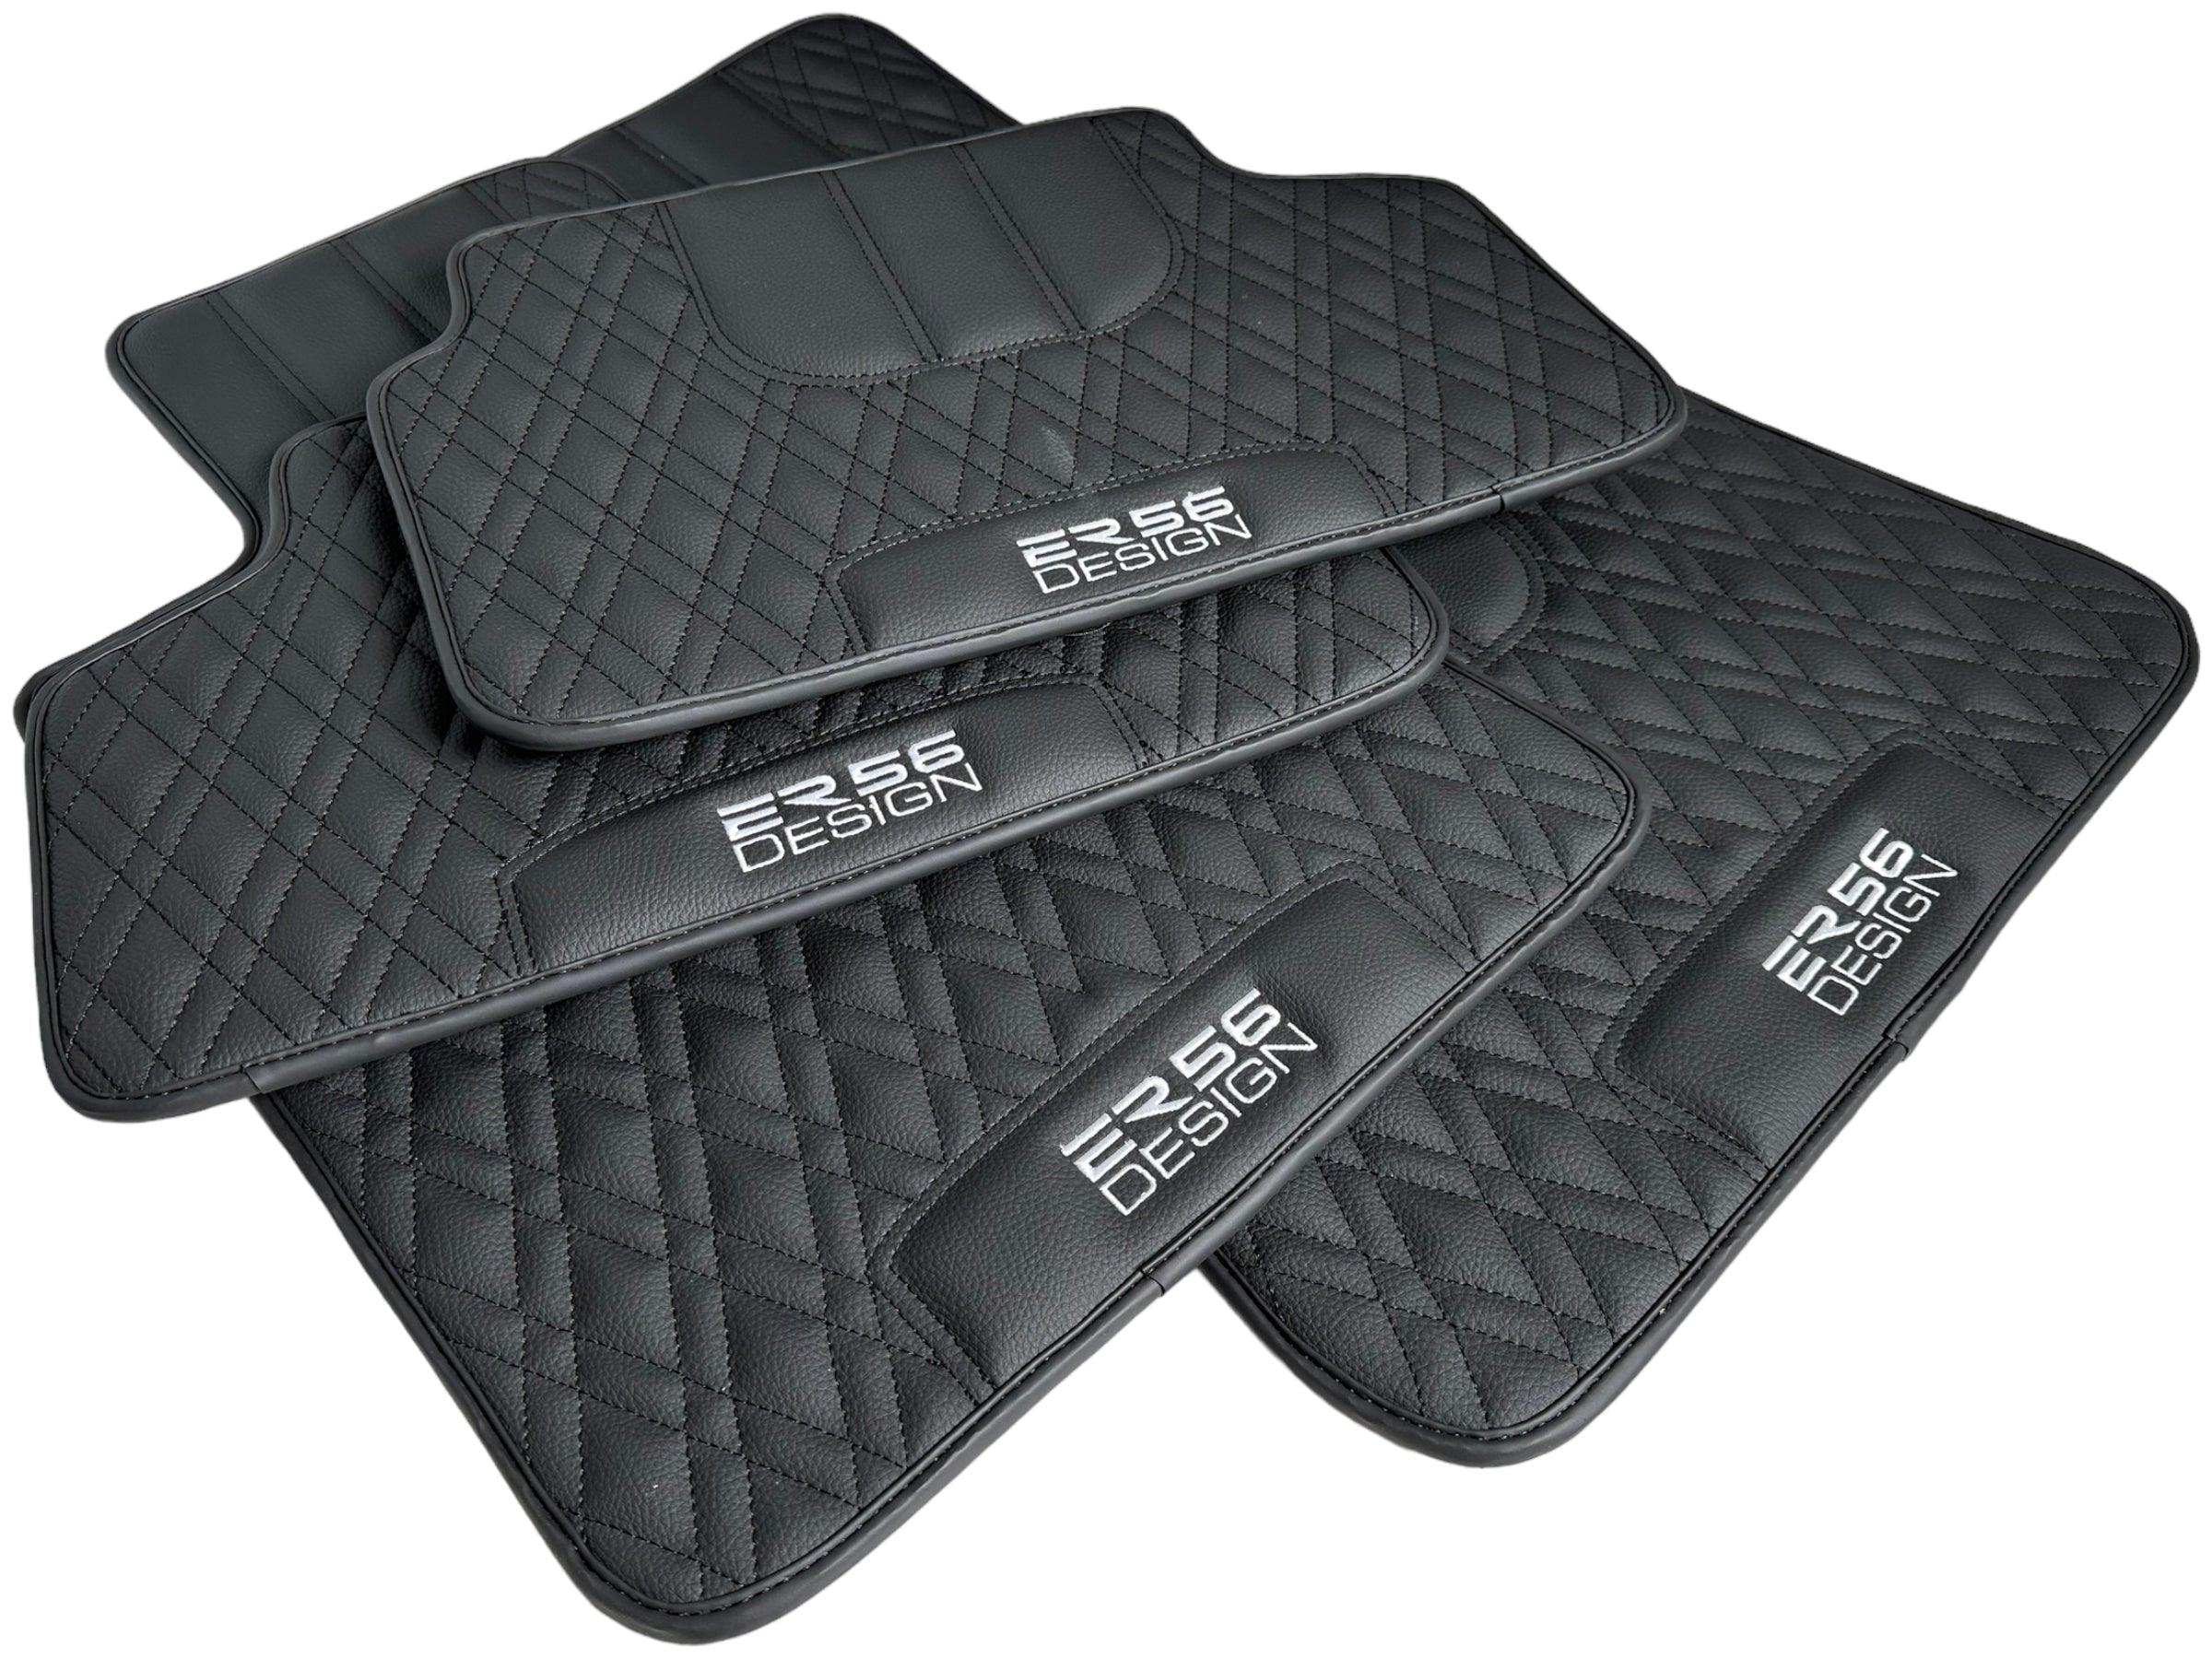 Floor Mats For BMW 6 Series E64 Convertible Black Leather Er56 Design - AutoWin